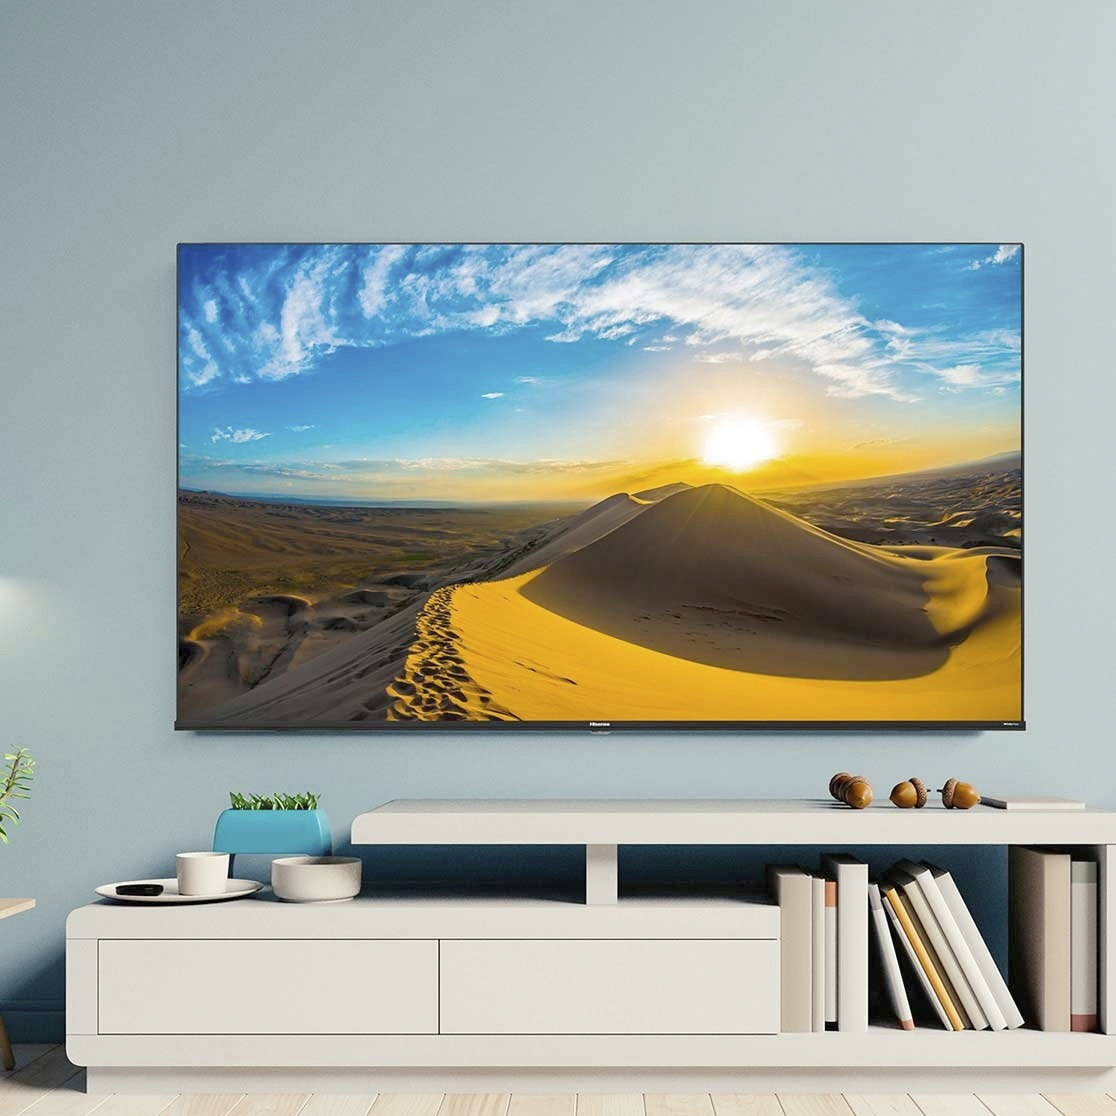 Pantalla TV Hisense 50A6G (50) LED Smart TV 4K Ultra HD Wi-fi